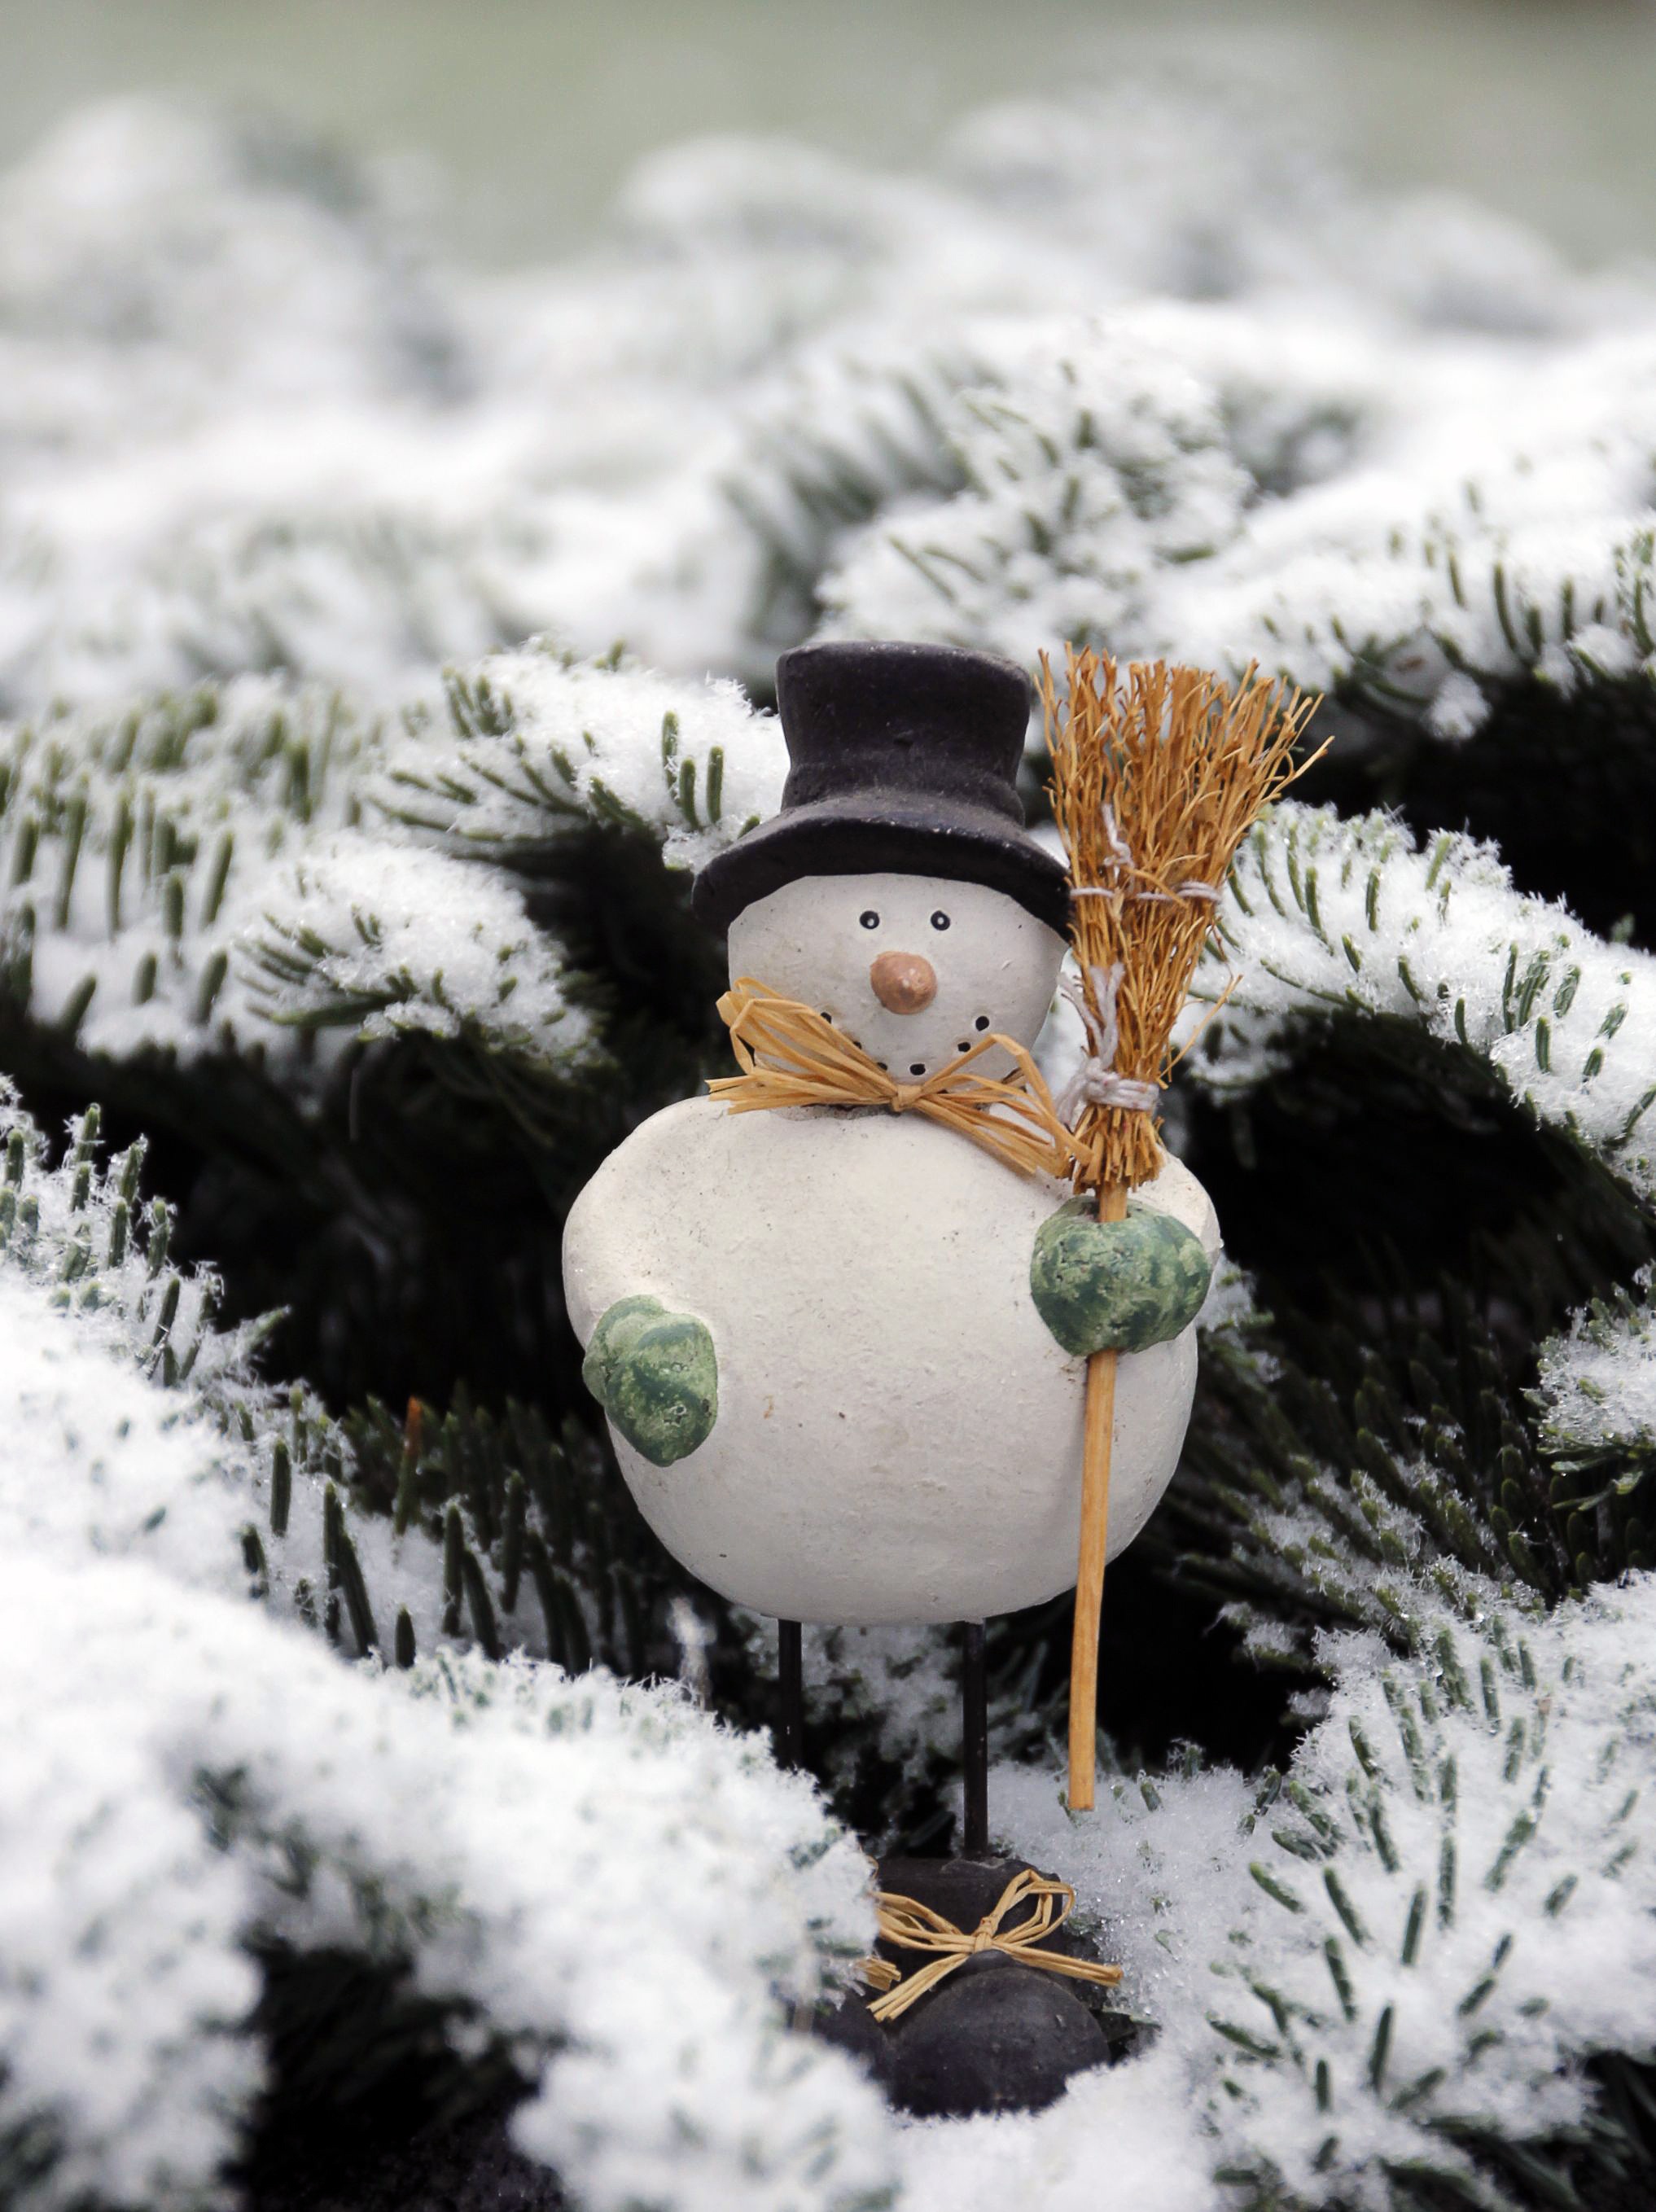 Free photo A snowman decorates the Christmas tree